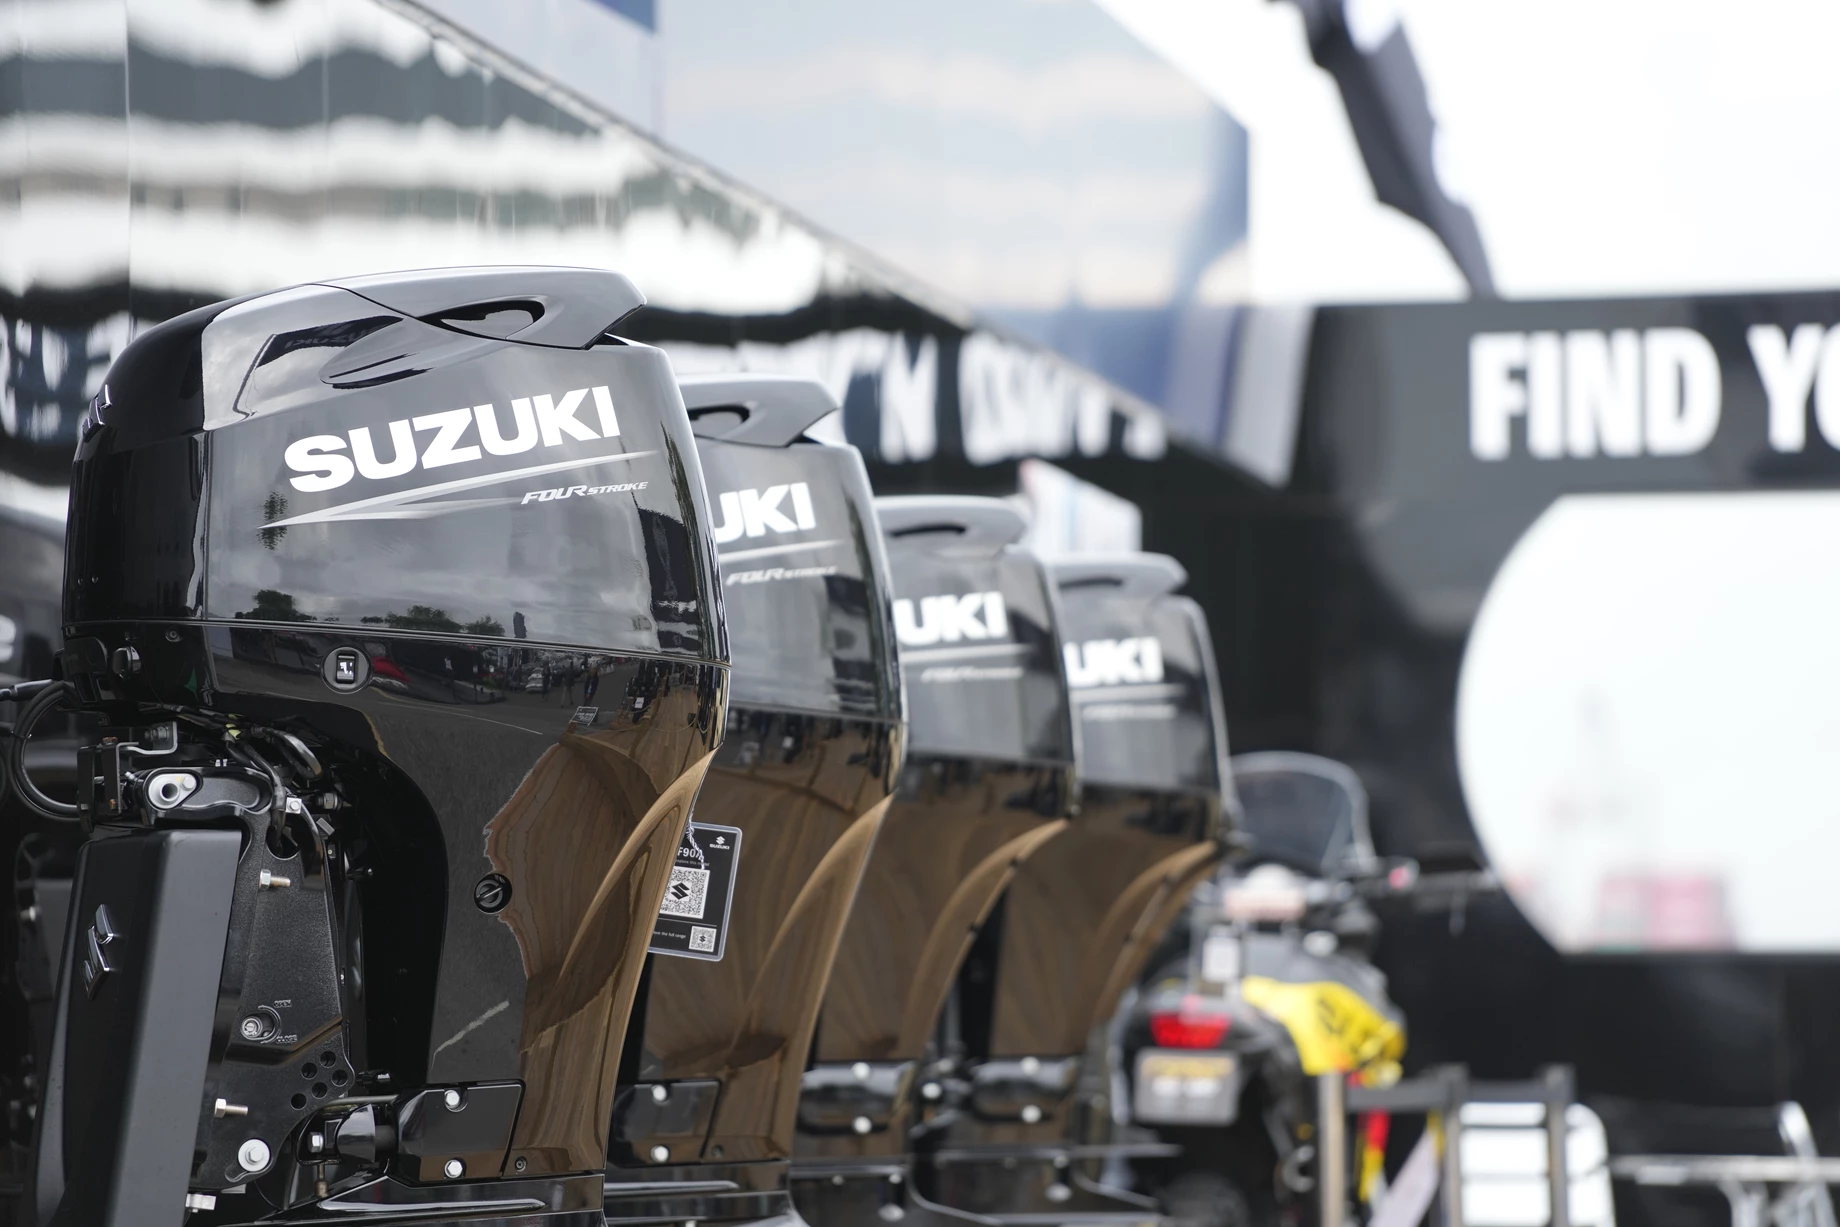 Suzuki outboard motors at the Southampton International Boat Show 2023